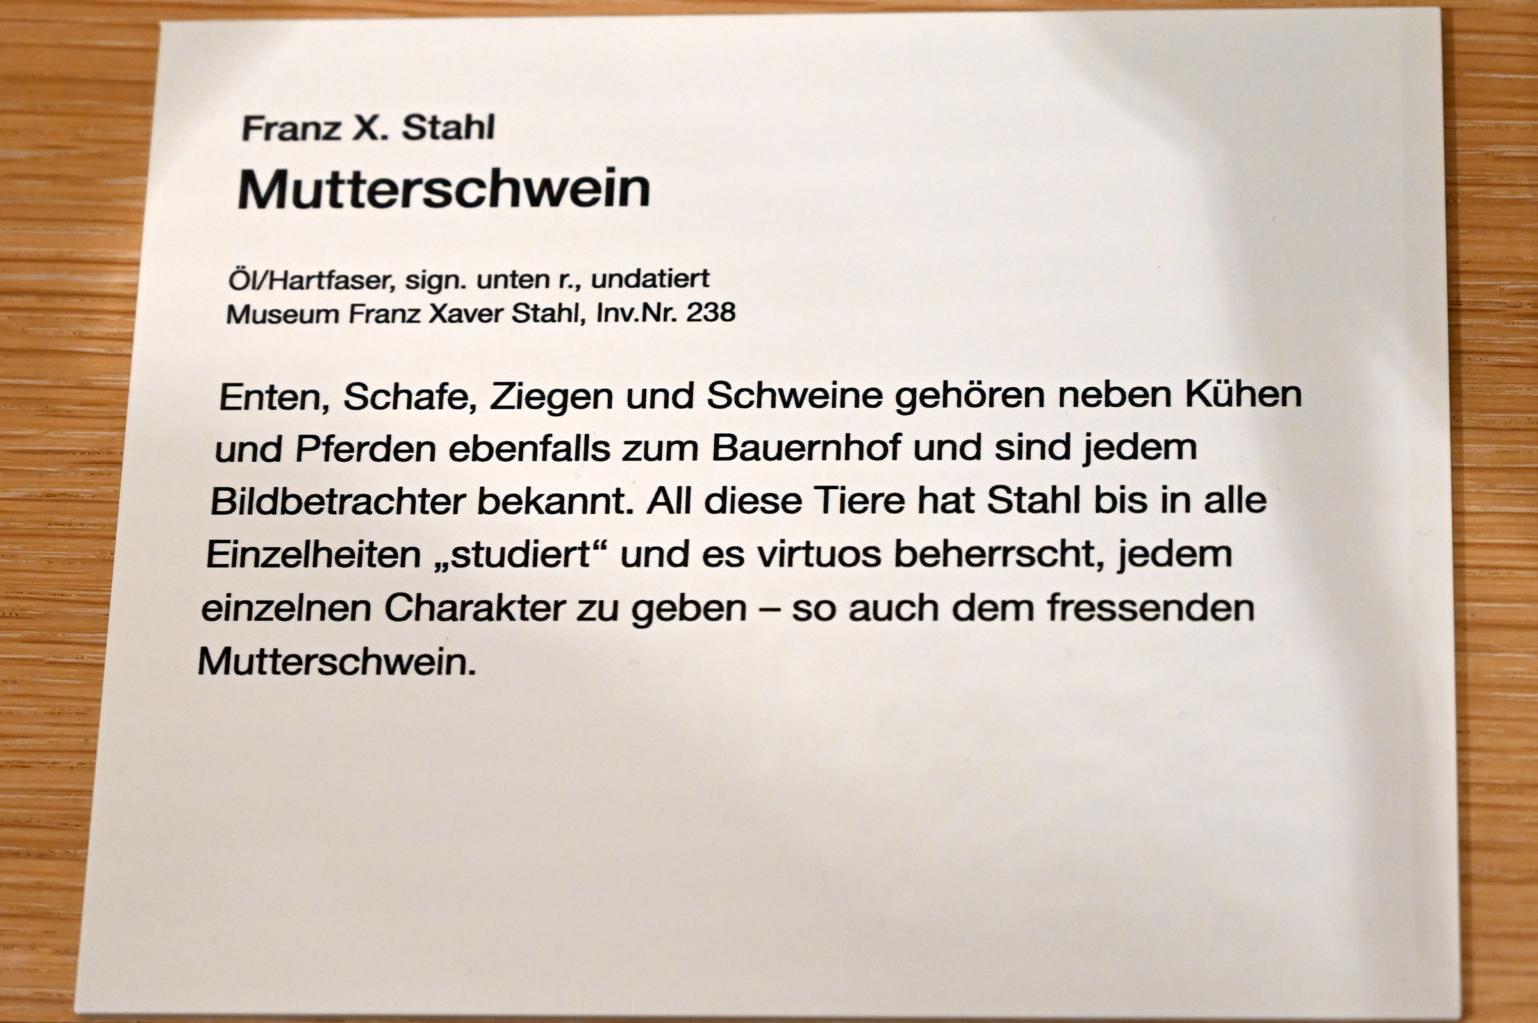 Franz Xaver Stahl (Undatiert), Mutterschwein, Erding, Museum Erding, Erdinger Künstler, Undatiert, Bild 2/2